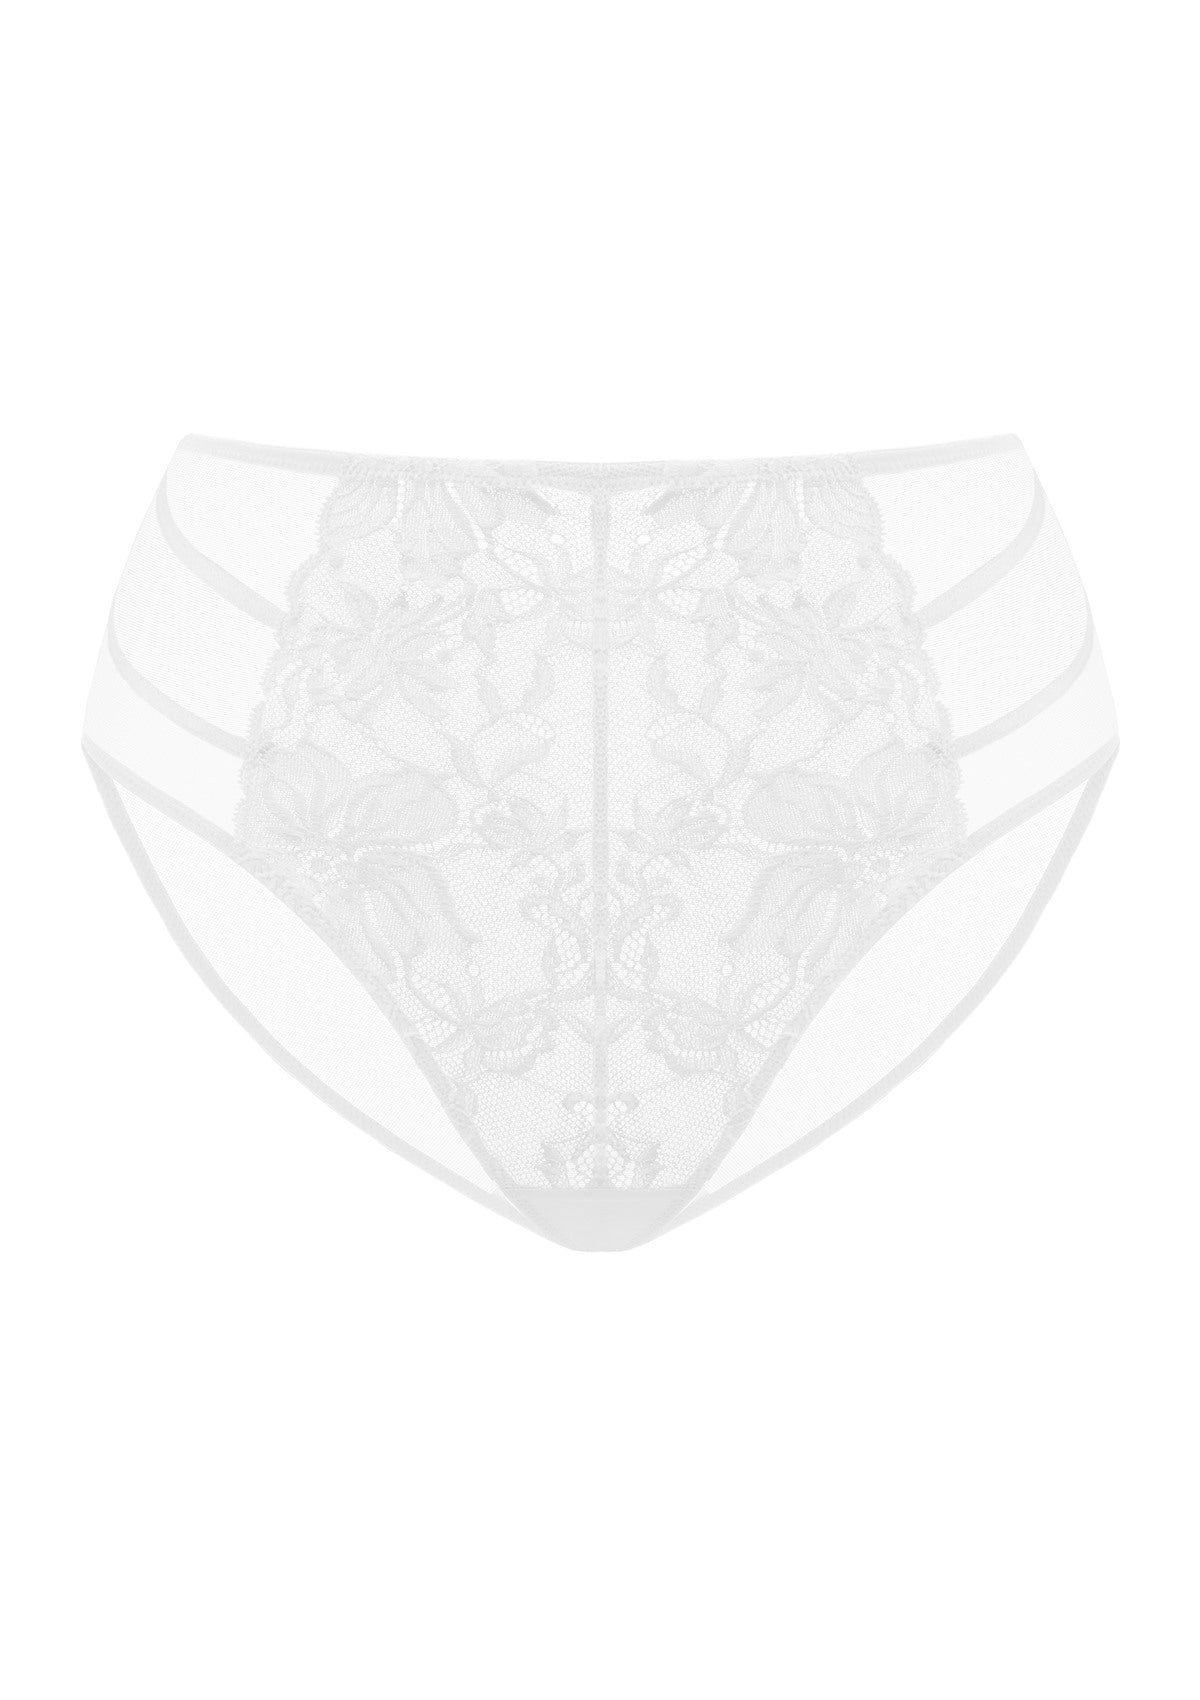 HSIA Mid-Rise Elegant Feminine Sheer Lace Mesh Comfortable Underwear. - M / Bikini / White